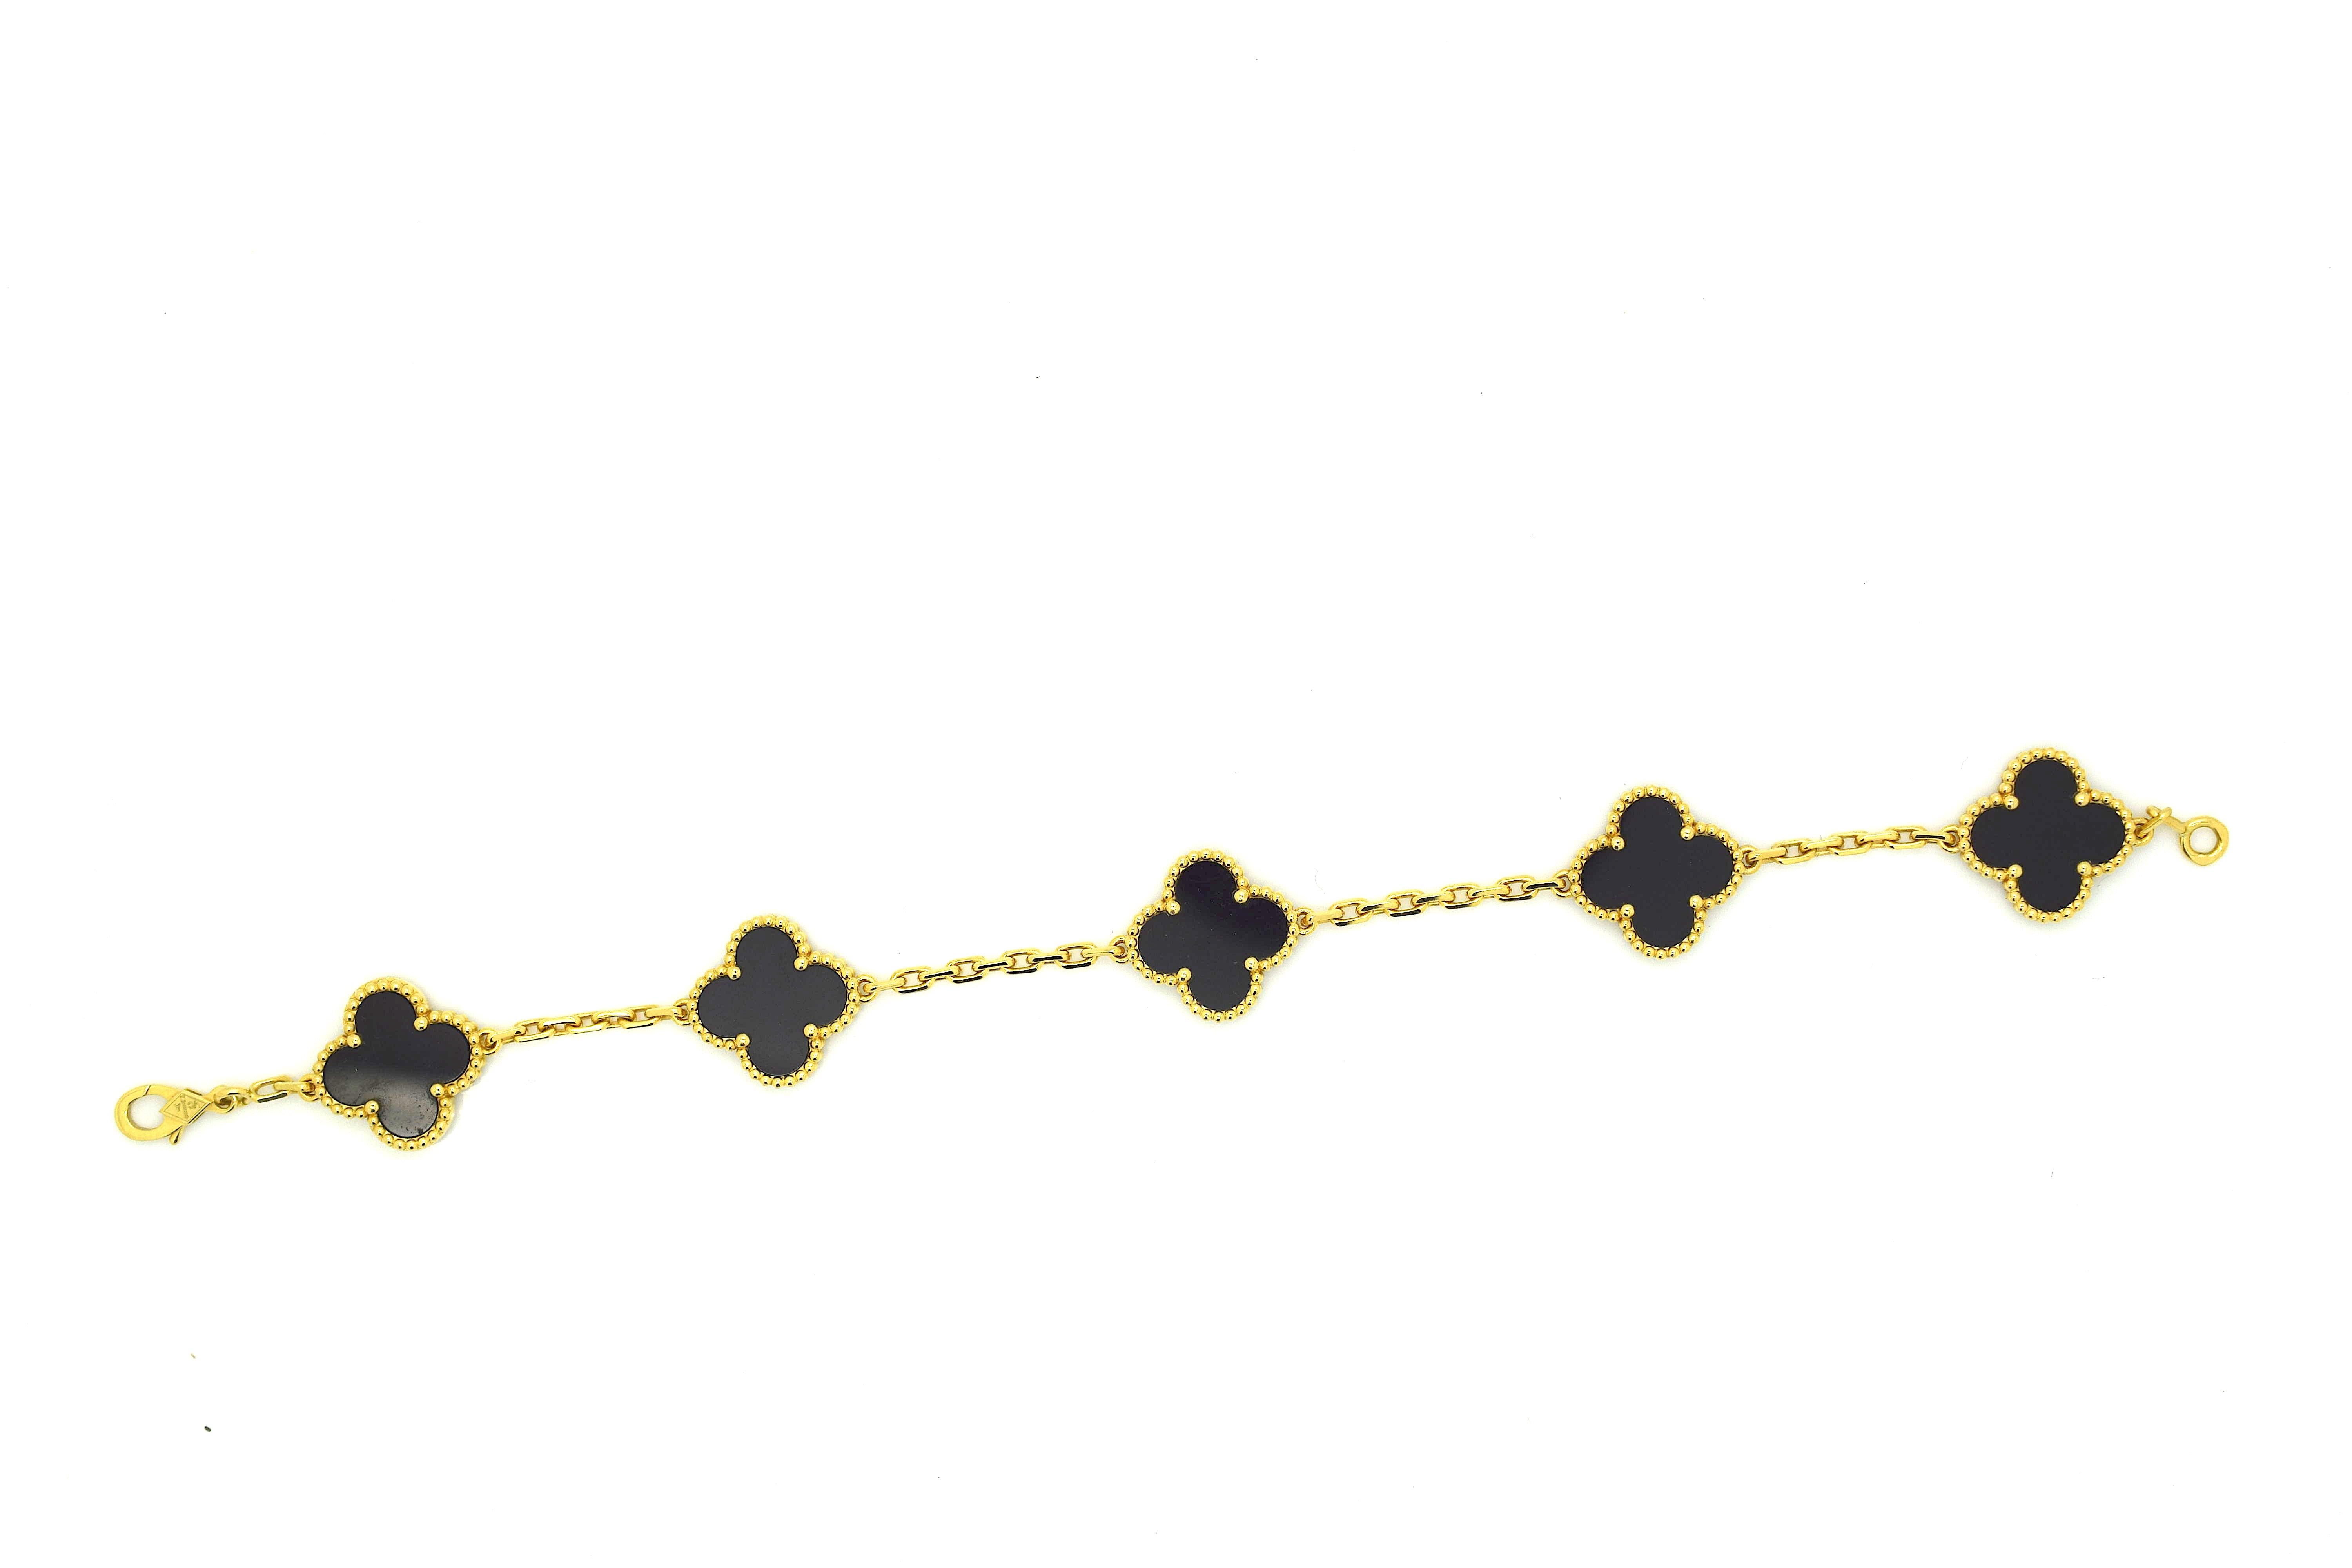 18k Yellow Gold 5-Motif Black Onyx Bracelet by Van Cleef & Arpels. 
Part of VCA's absolutely stunning 